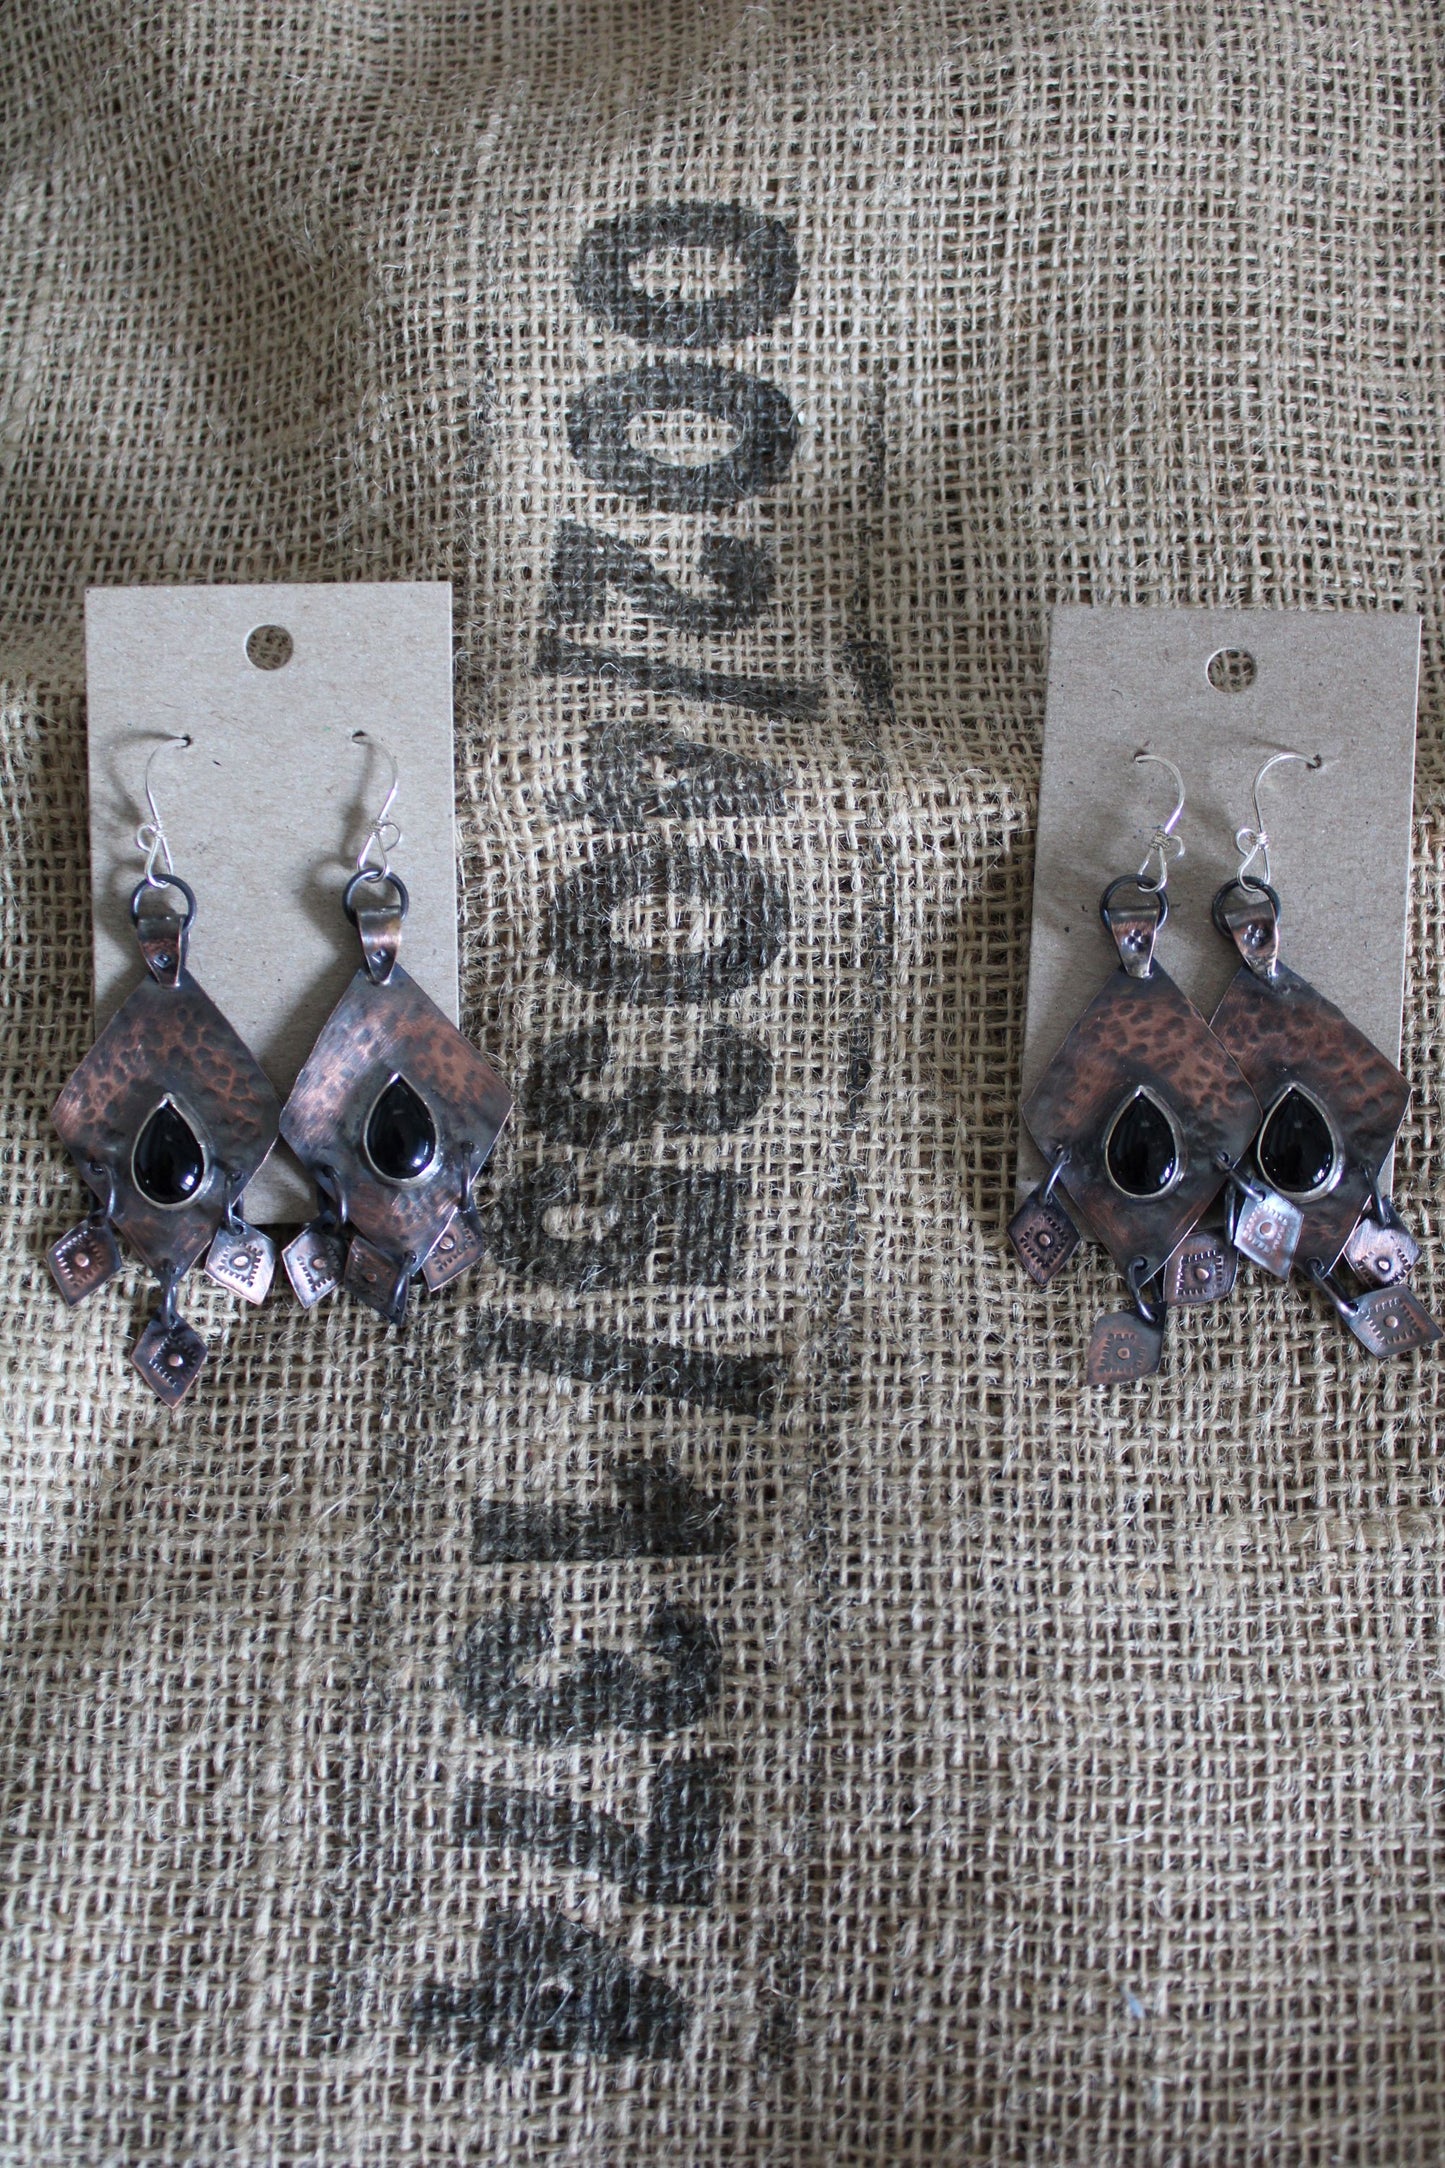 Black Onyx Gemstone and Mixed Metal Statement Earrings: Copper Earrings